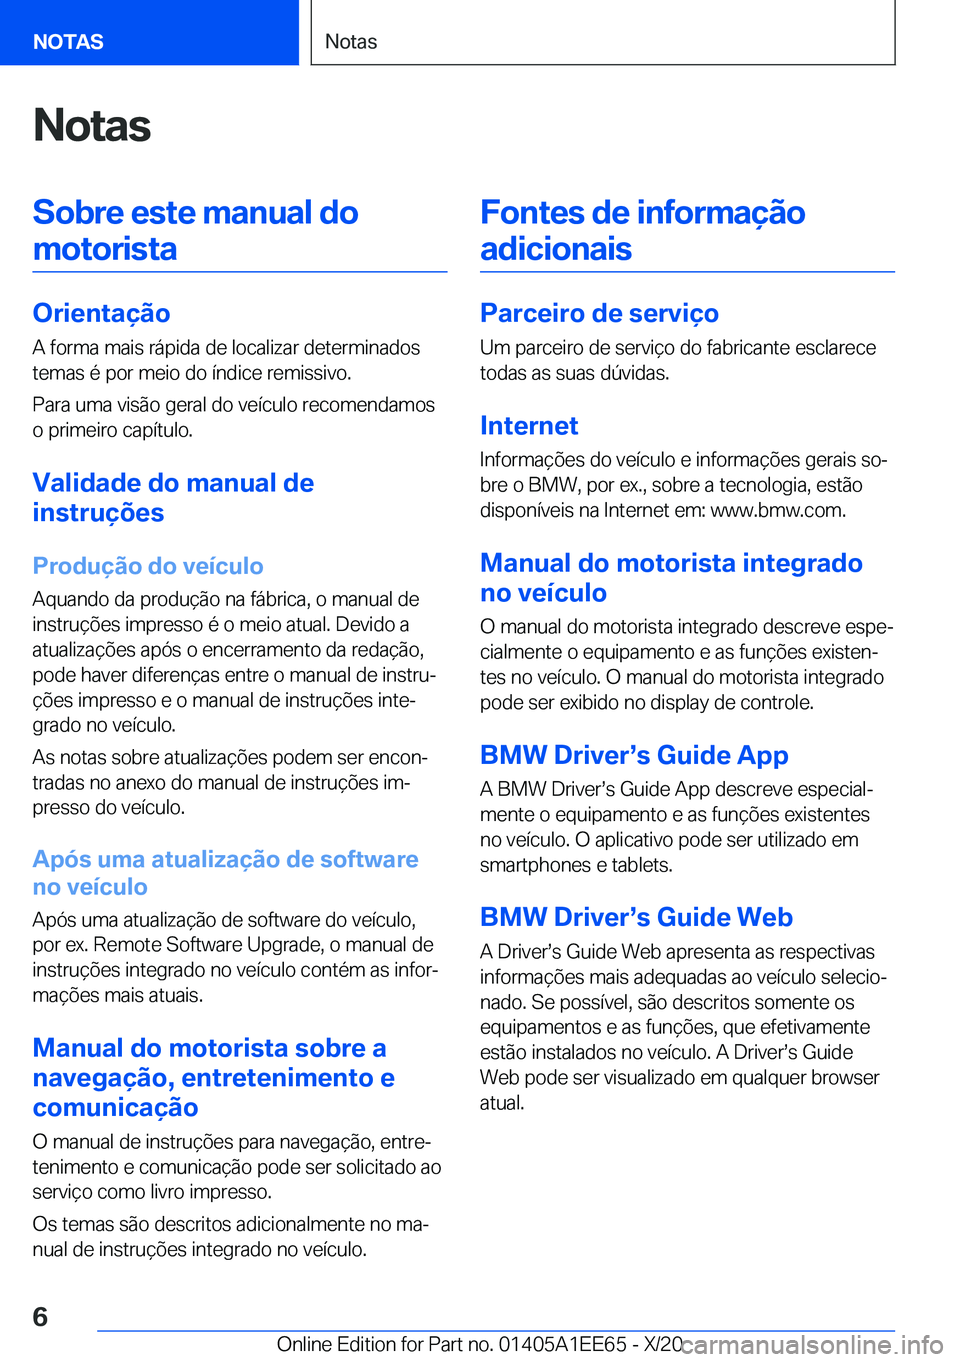 BMW 8 SERIES CONVERTIBLE 2021  Manual do condutor (in Portuguese) �N�o�t�a�s�S�o�b�r�e��e�s�t�e��m�a�n�u�a�l��d�o�m�o�t�o�r�i�s�t�a
�O�r�i�e�n�t�a�